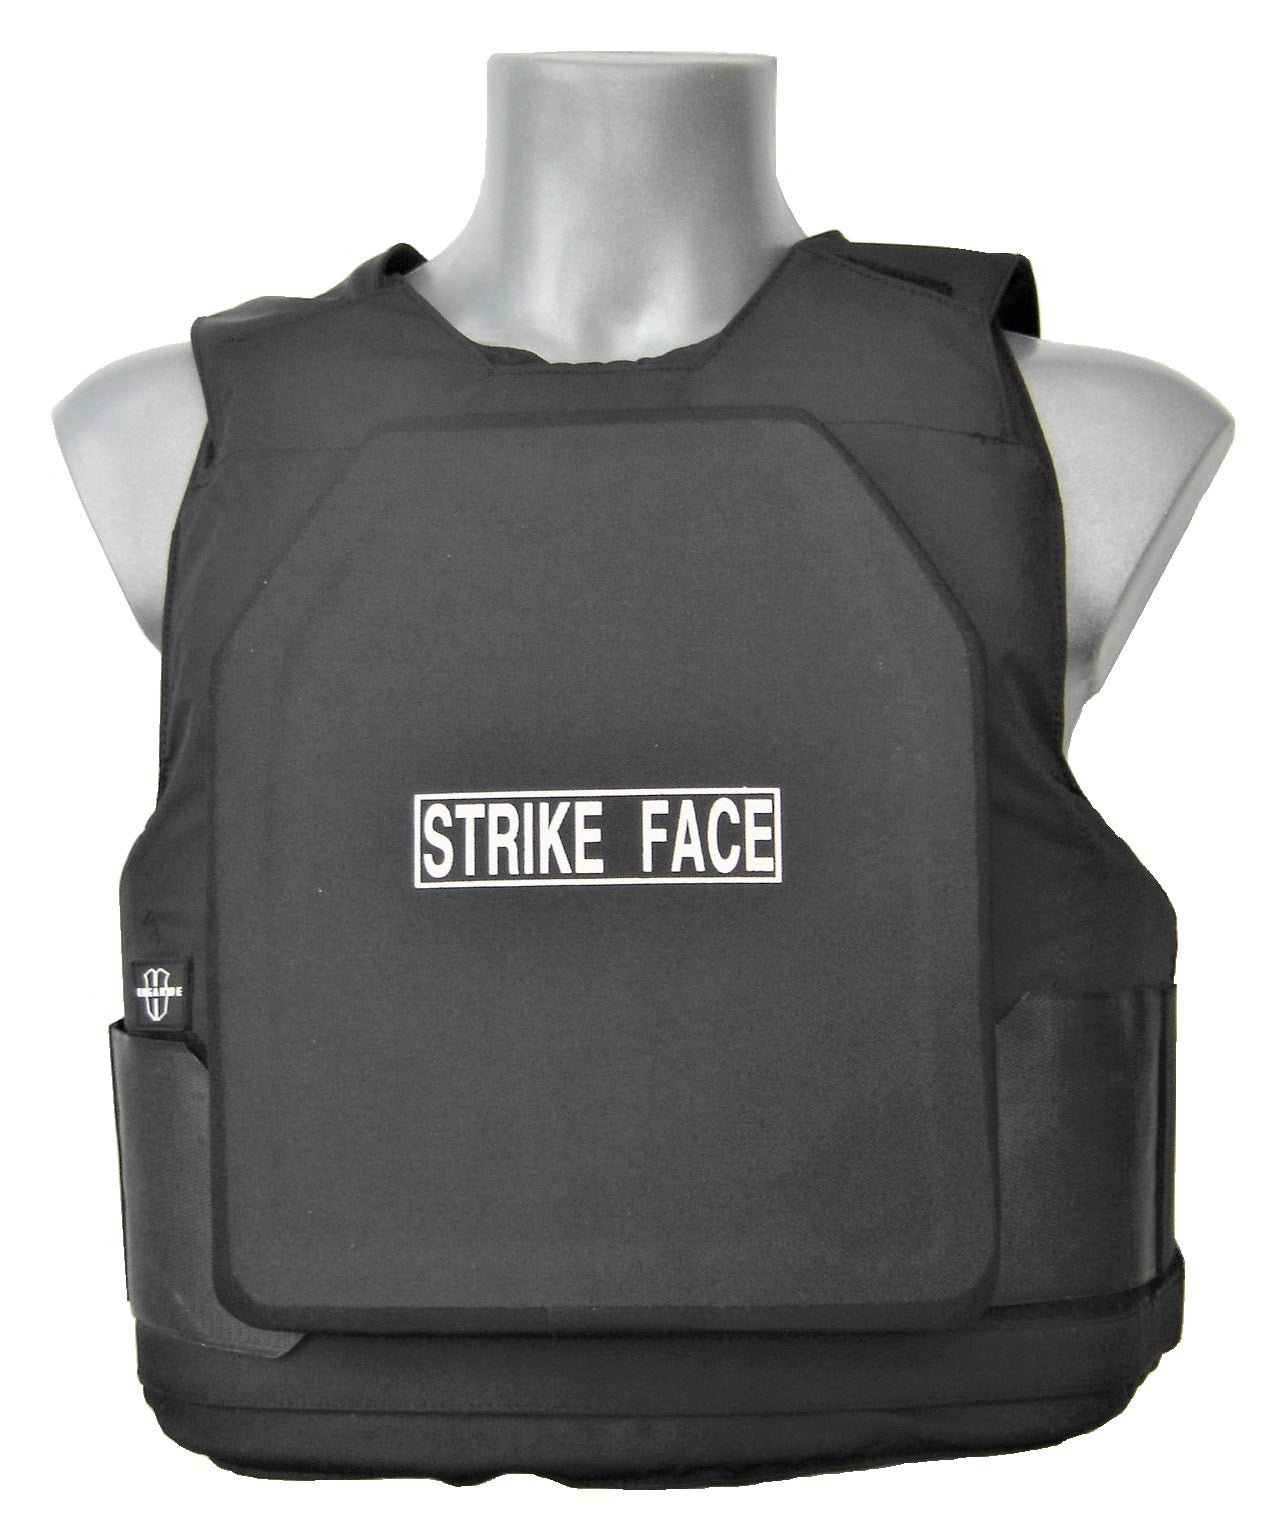 Dual-Use bulletproof vest class NIJ-4 SA FLEX-PRO black Engarde